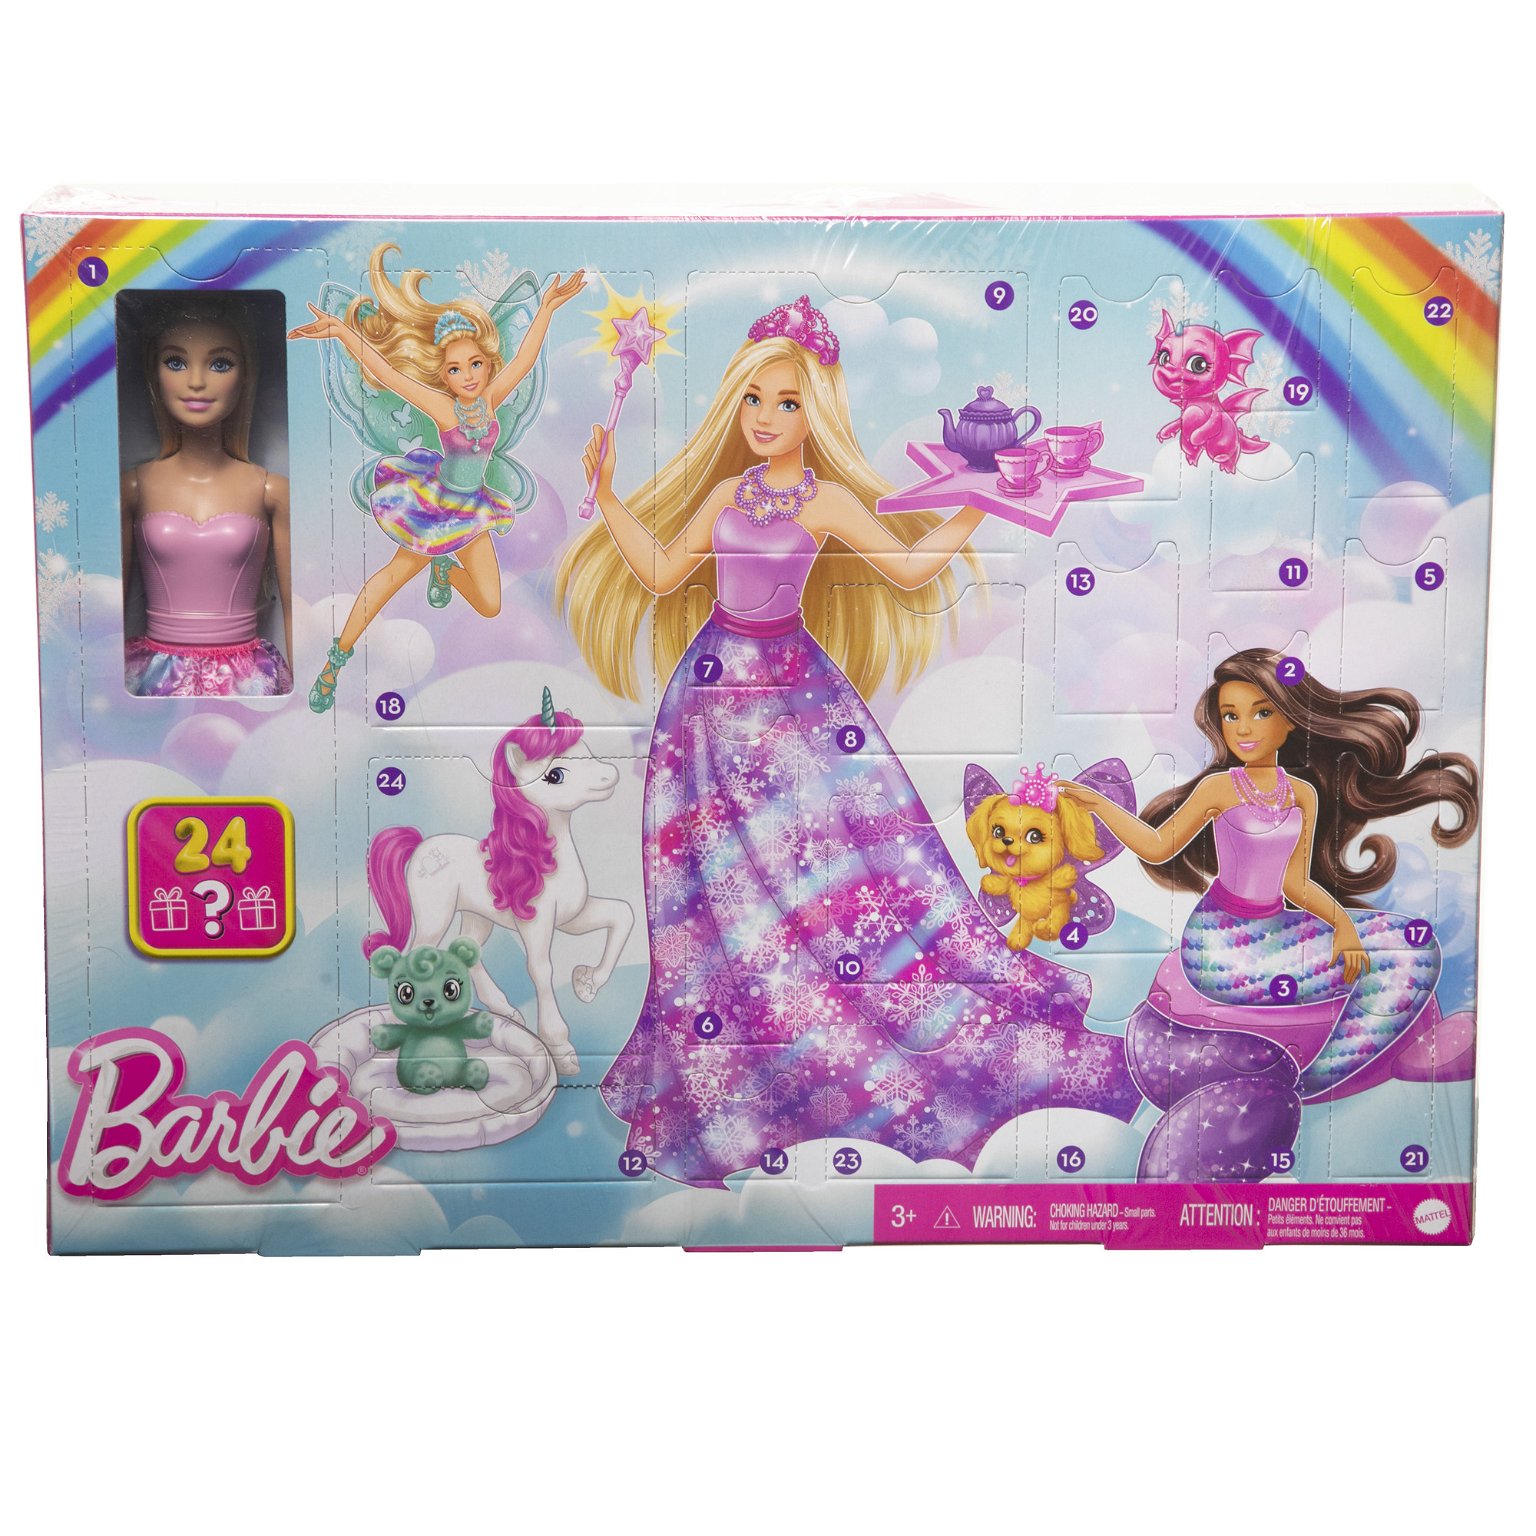 Barbie Dreamtopia advento kalendorius